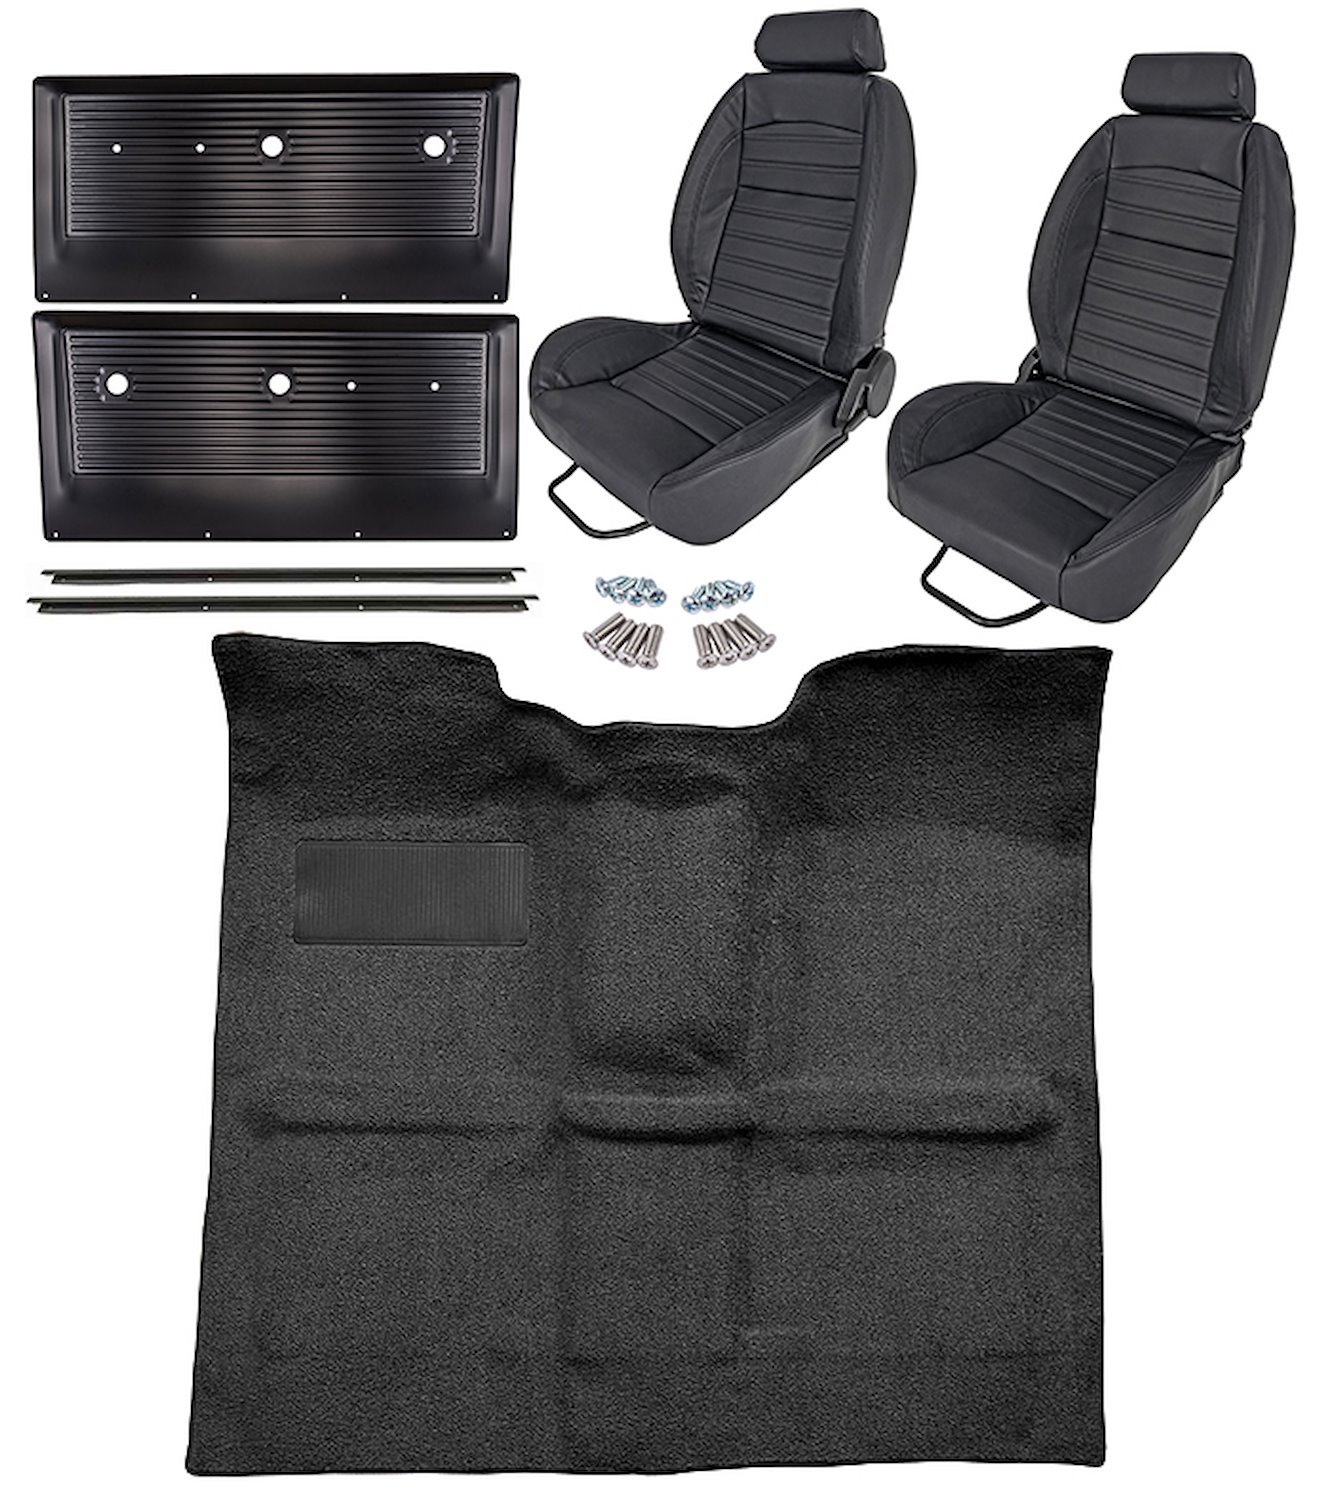 Black Interior Kit w/High-Back Buckets for 1967-1972 GM C Series Regular Cab Truck w/o Gas Tank in Cab, TH400